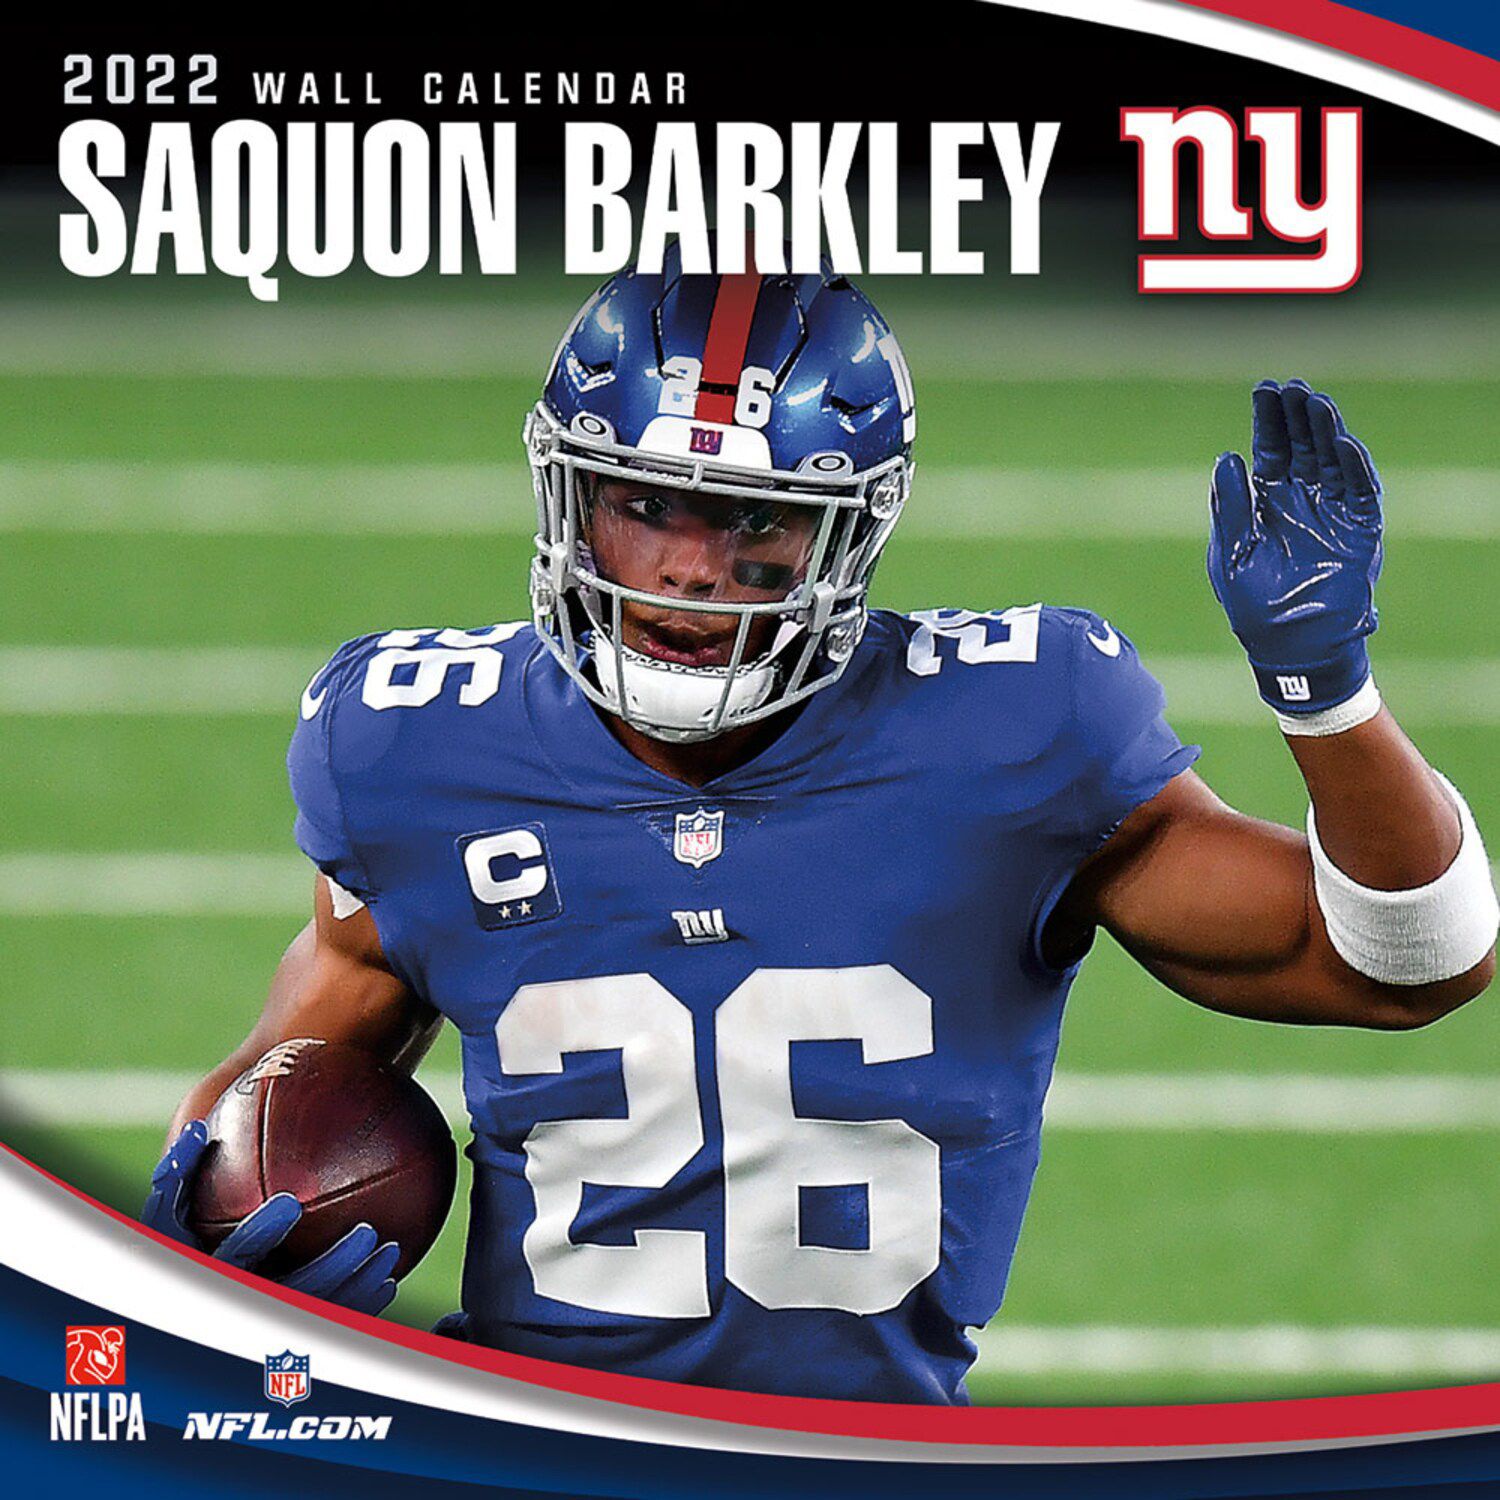 Image for Unbranded Saquon Barkley New York Giants 2022 Player Wall Calendar at Kohl's.